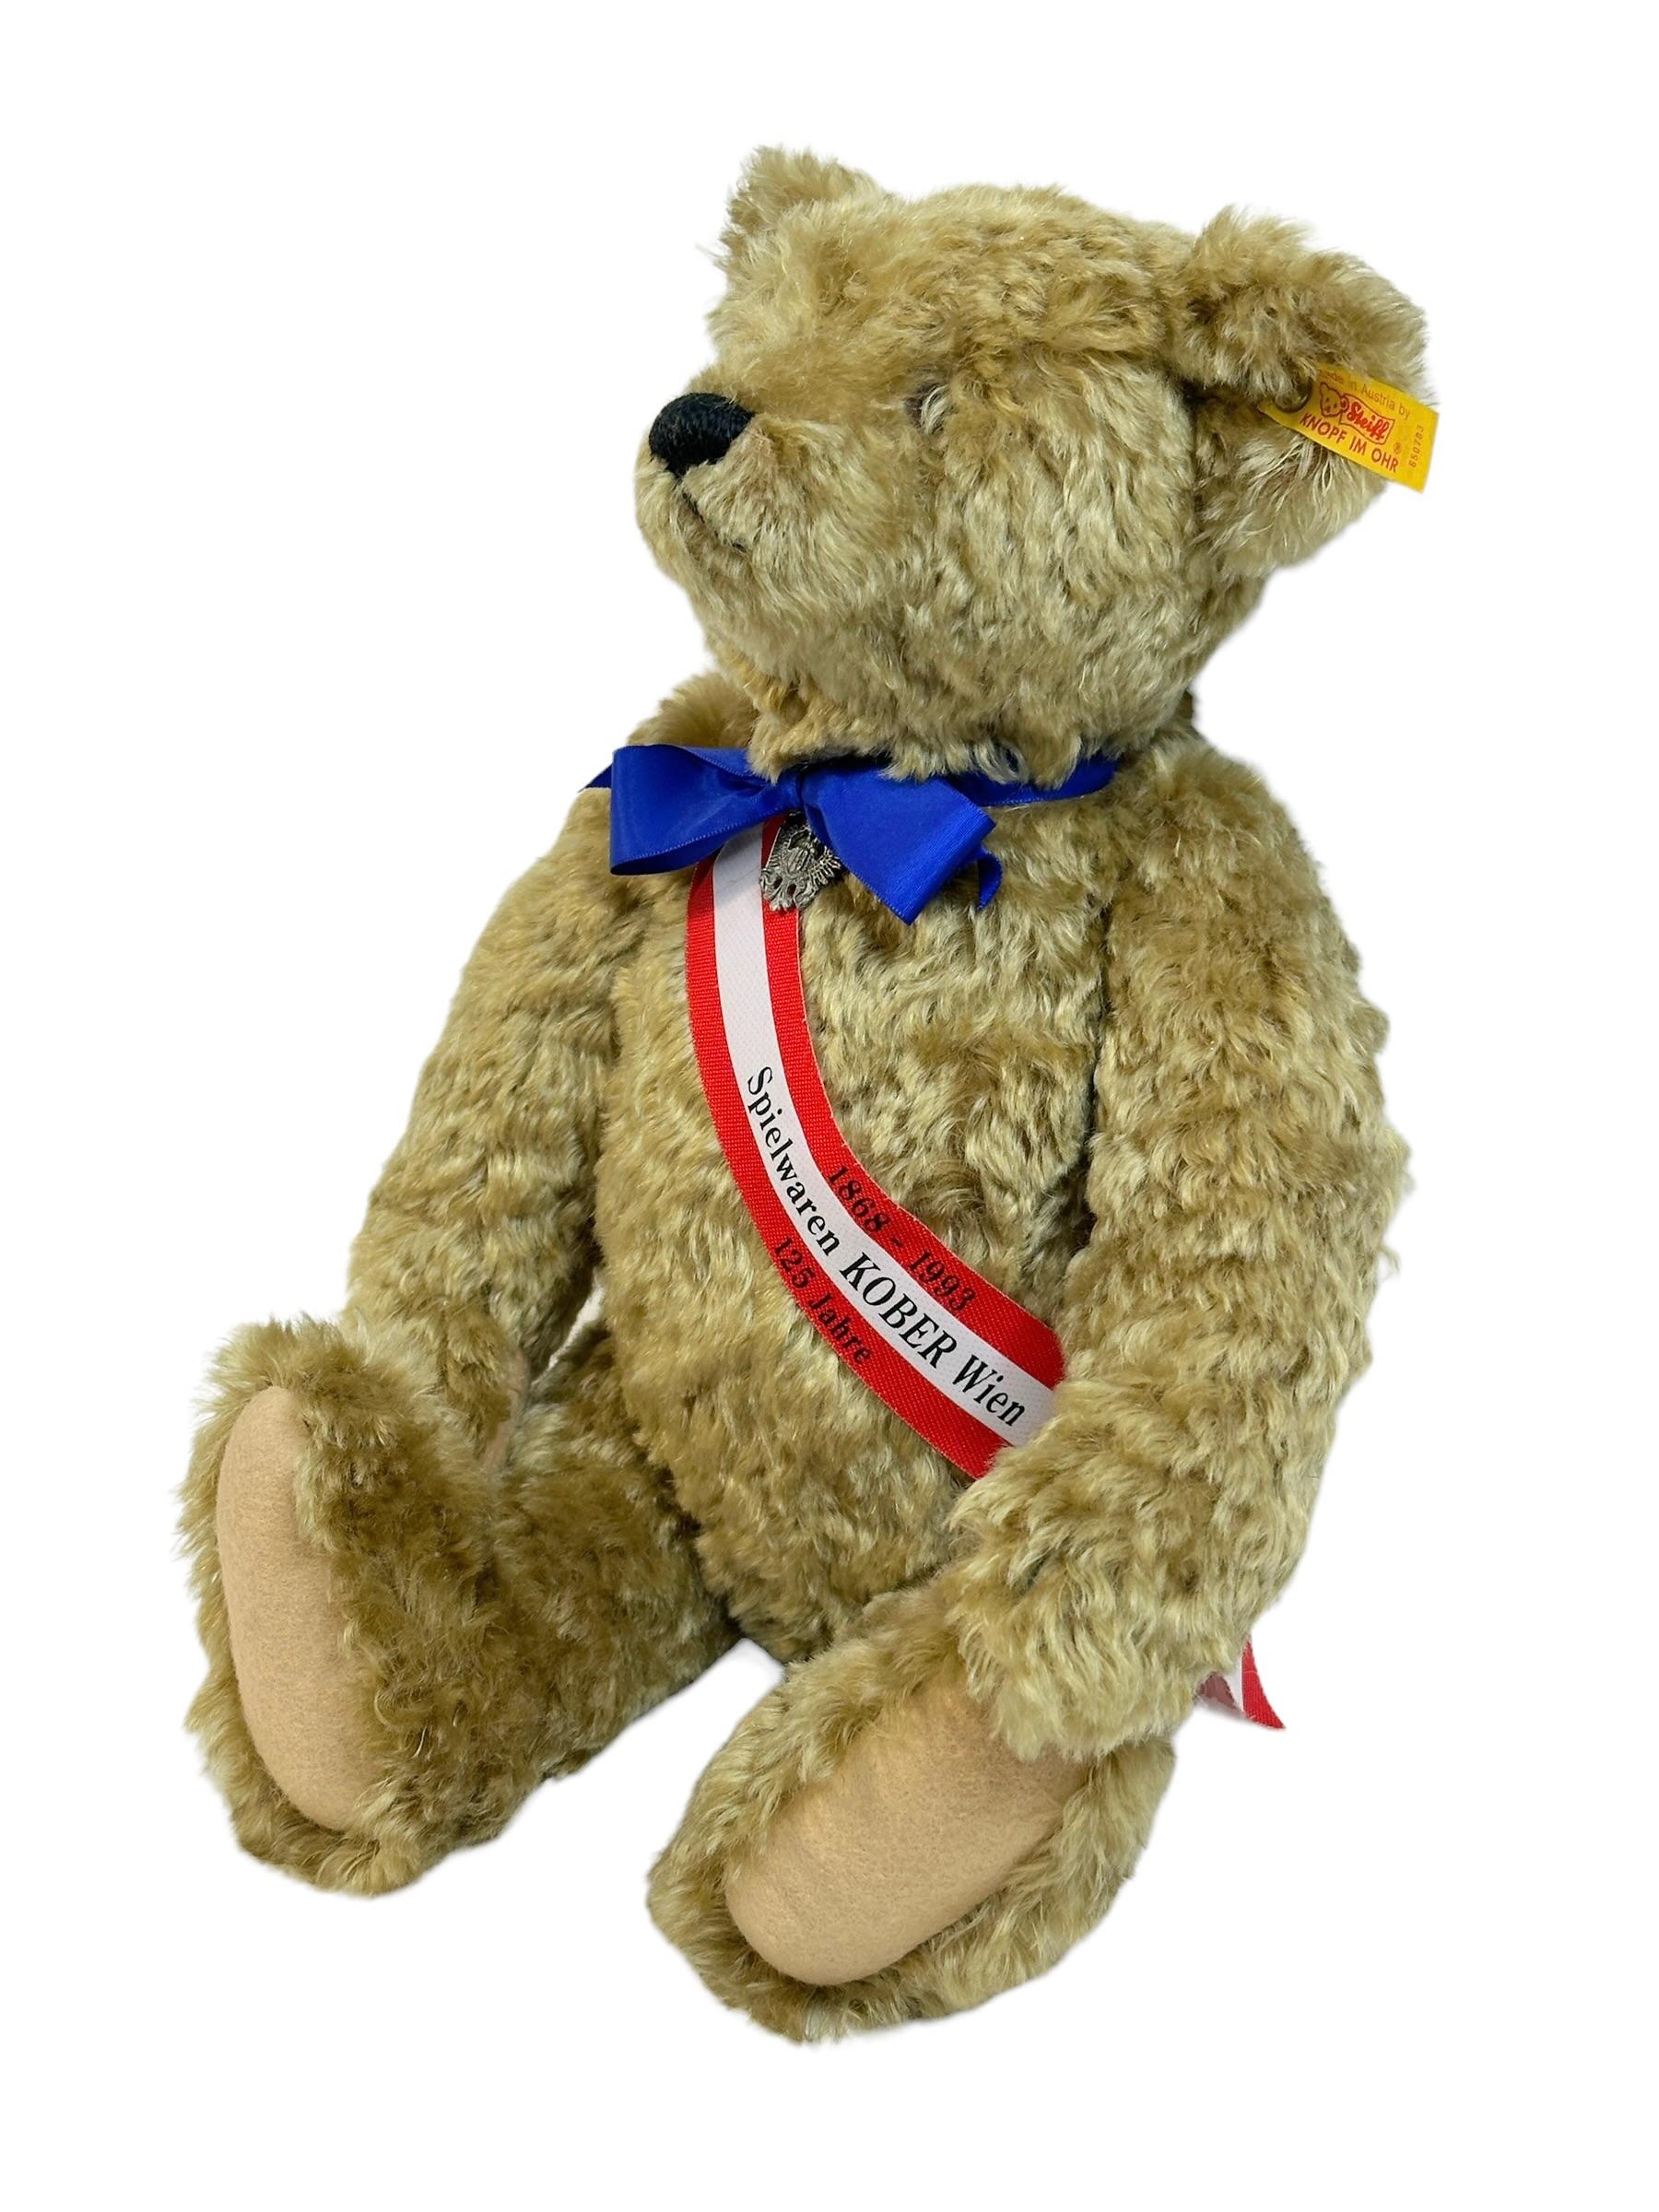 Steiff Collectible Teddy Bear Toy Store Kober Vienna exclusive, Vintage Austria In Good Condition For Sale In Nuernberg, DE